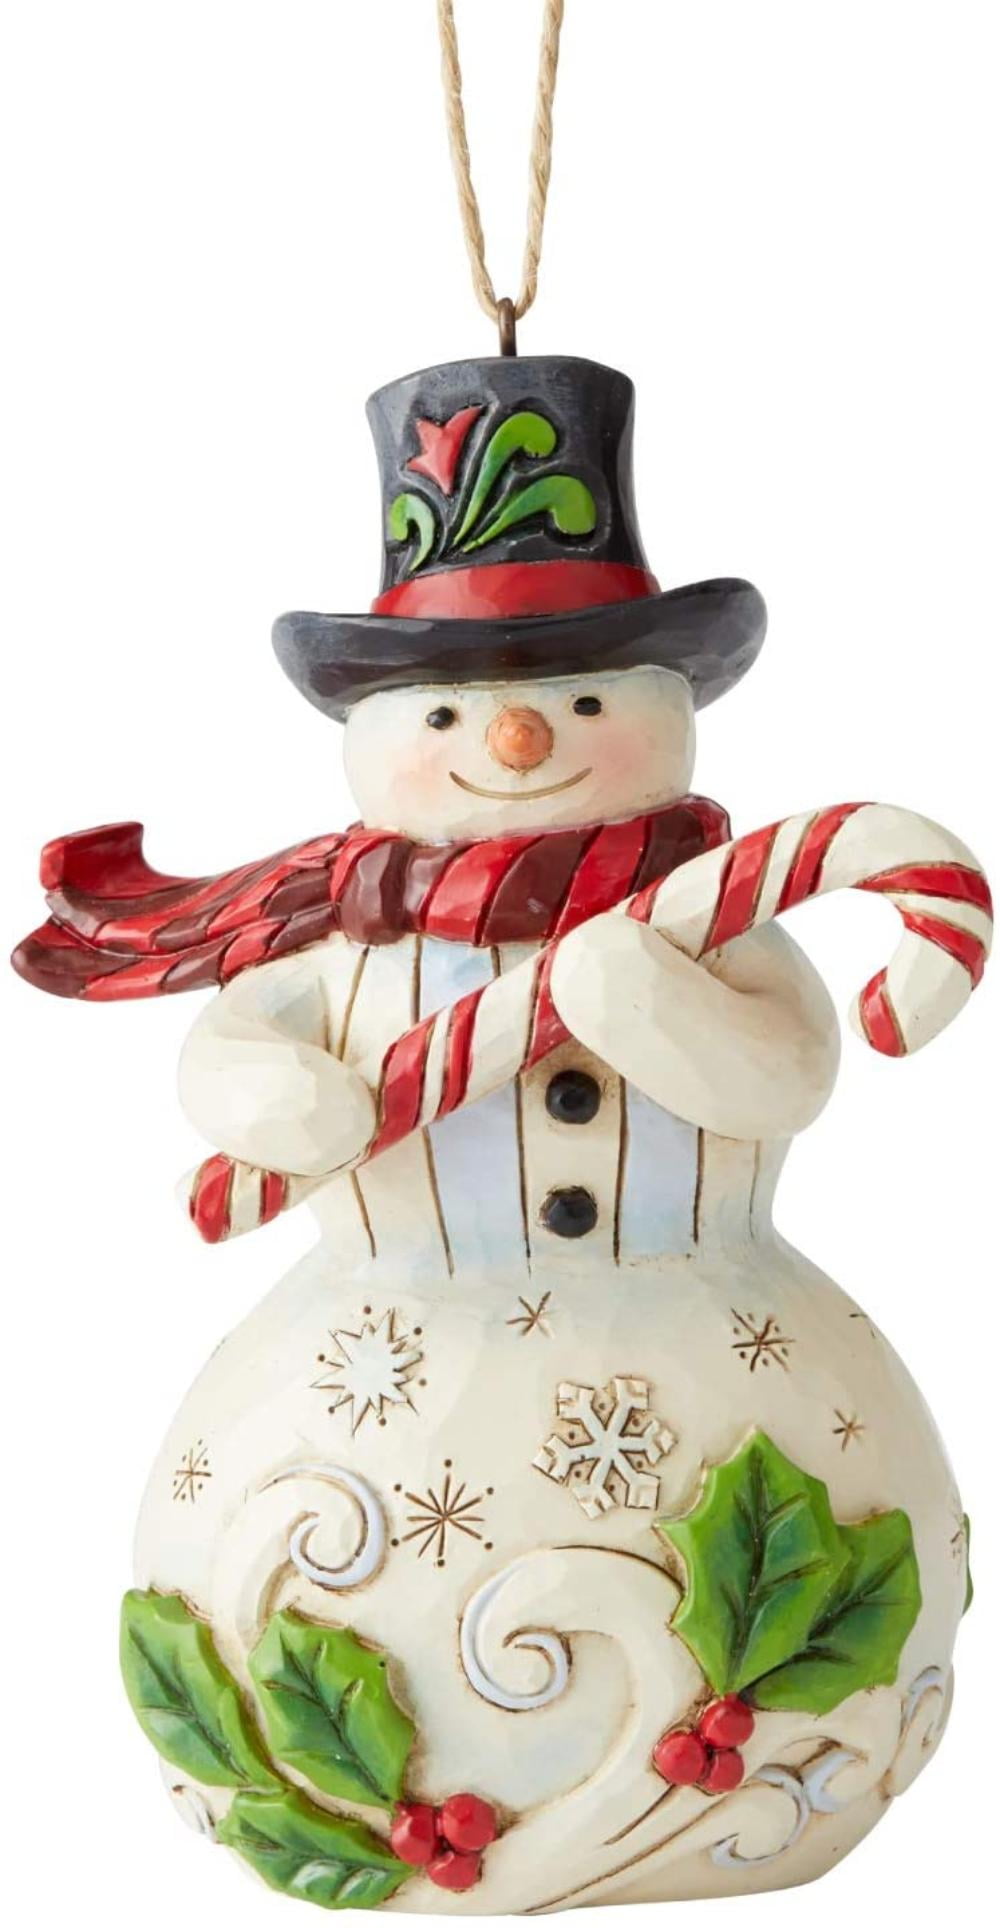 Enesco Jim Shore Heartwood Creek Snowman Holding Candy Cane Figurine 